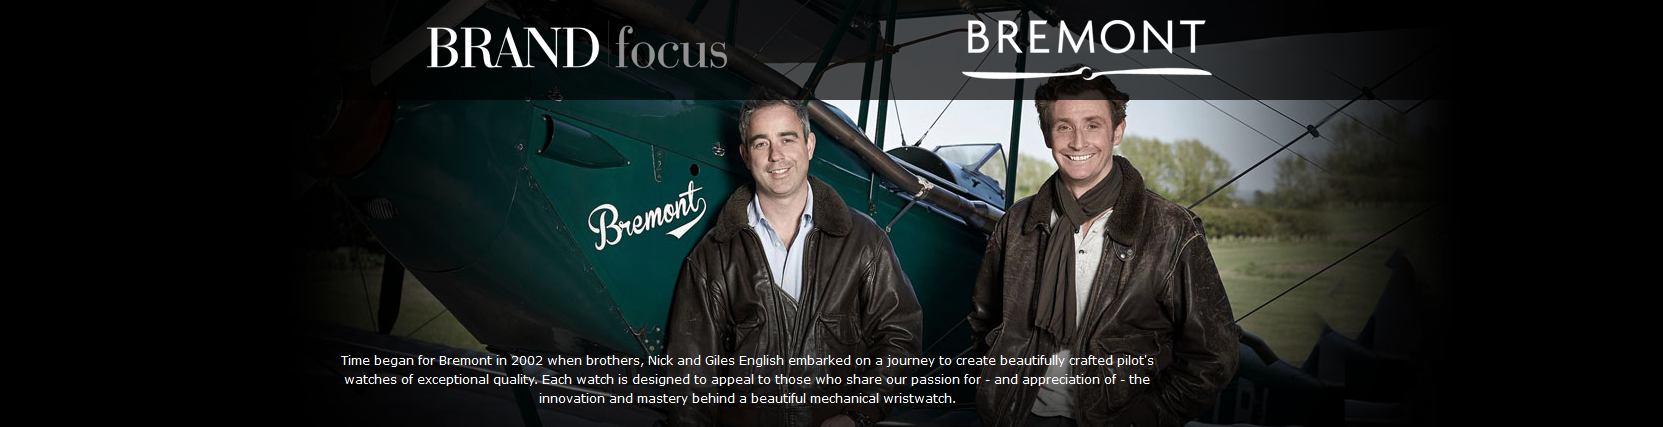 Screenshot-2018-2-3 Bremont Brand Focus Beaverbrooks the Jewellers.png